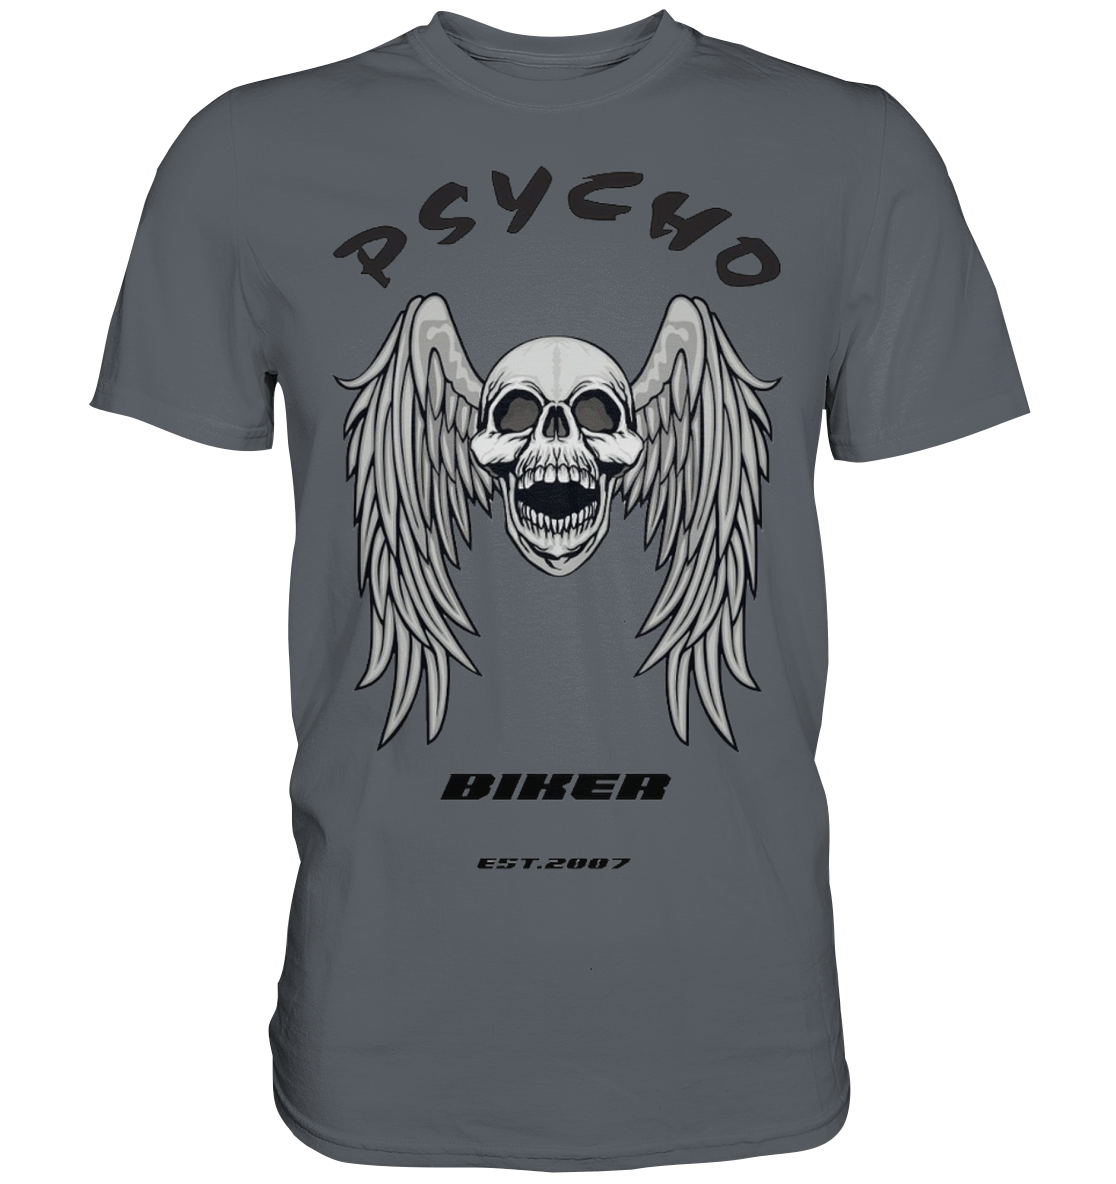 Psycho Shirt 